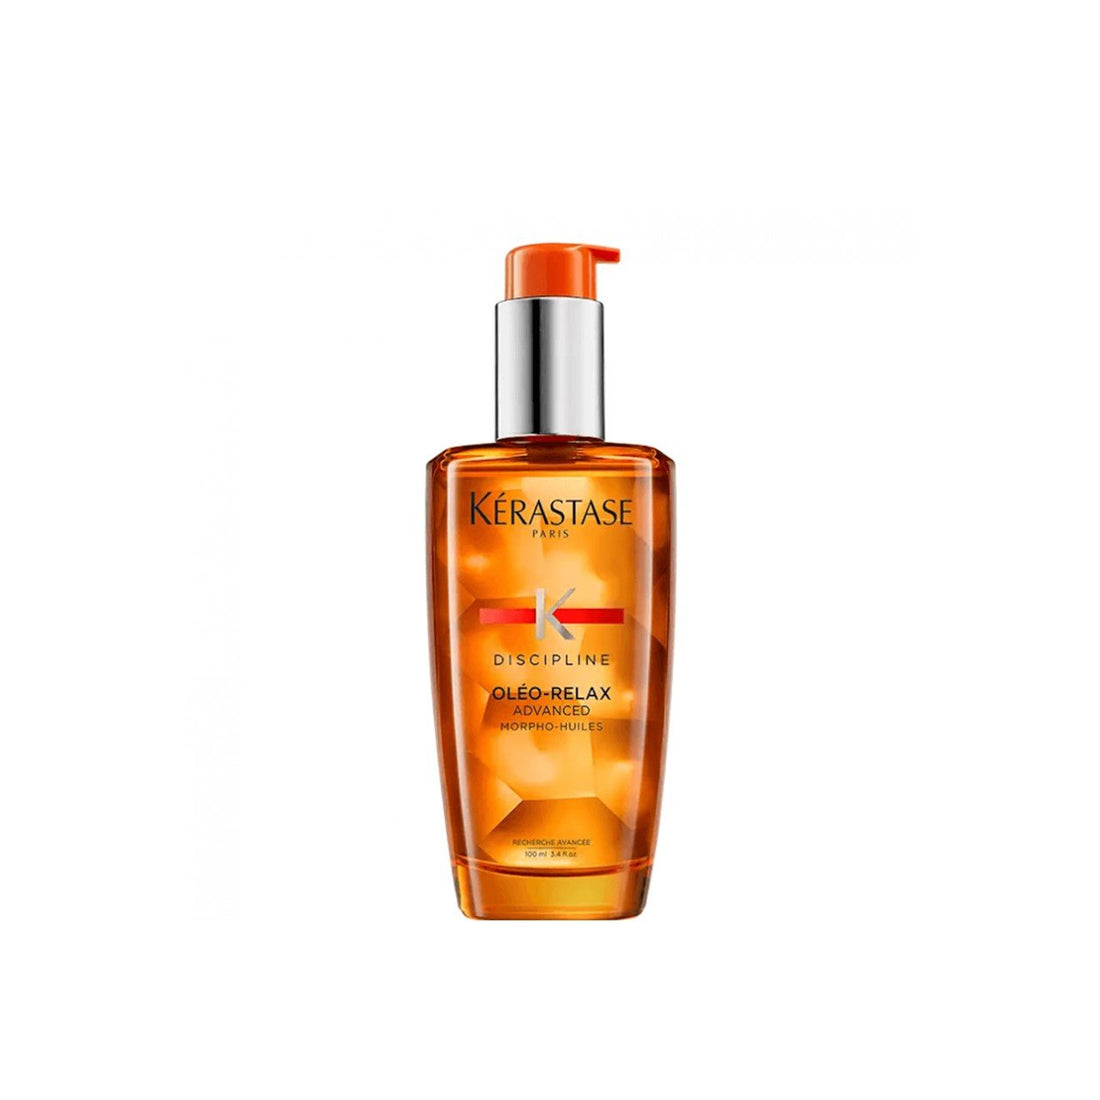 Kérastase Discipline Oléo-Relax Advanced Hair Oil 100ml (3.38fl oz)